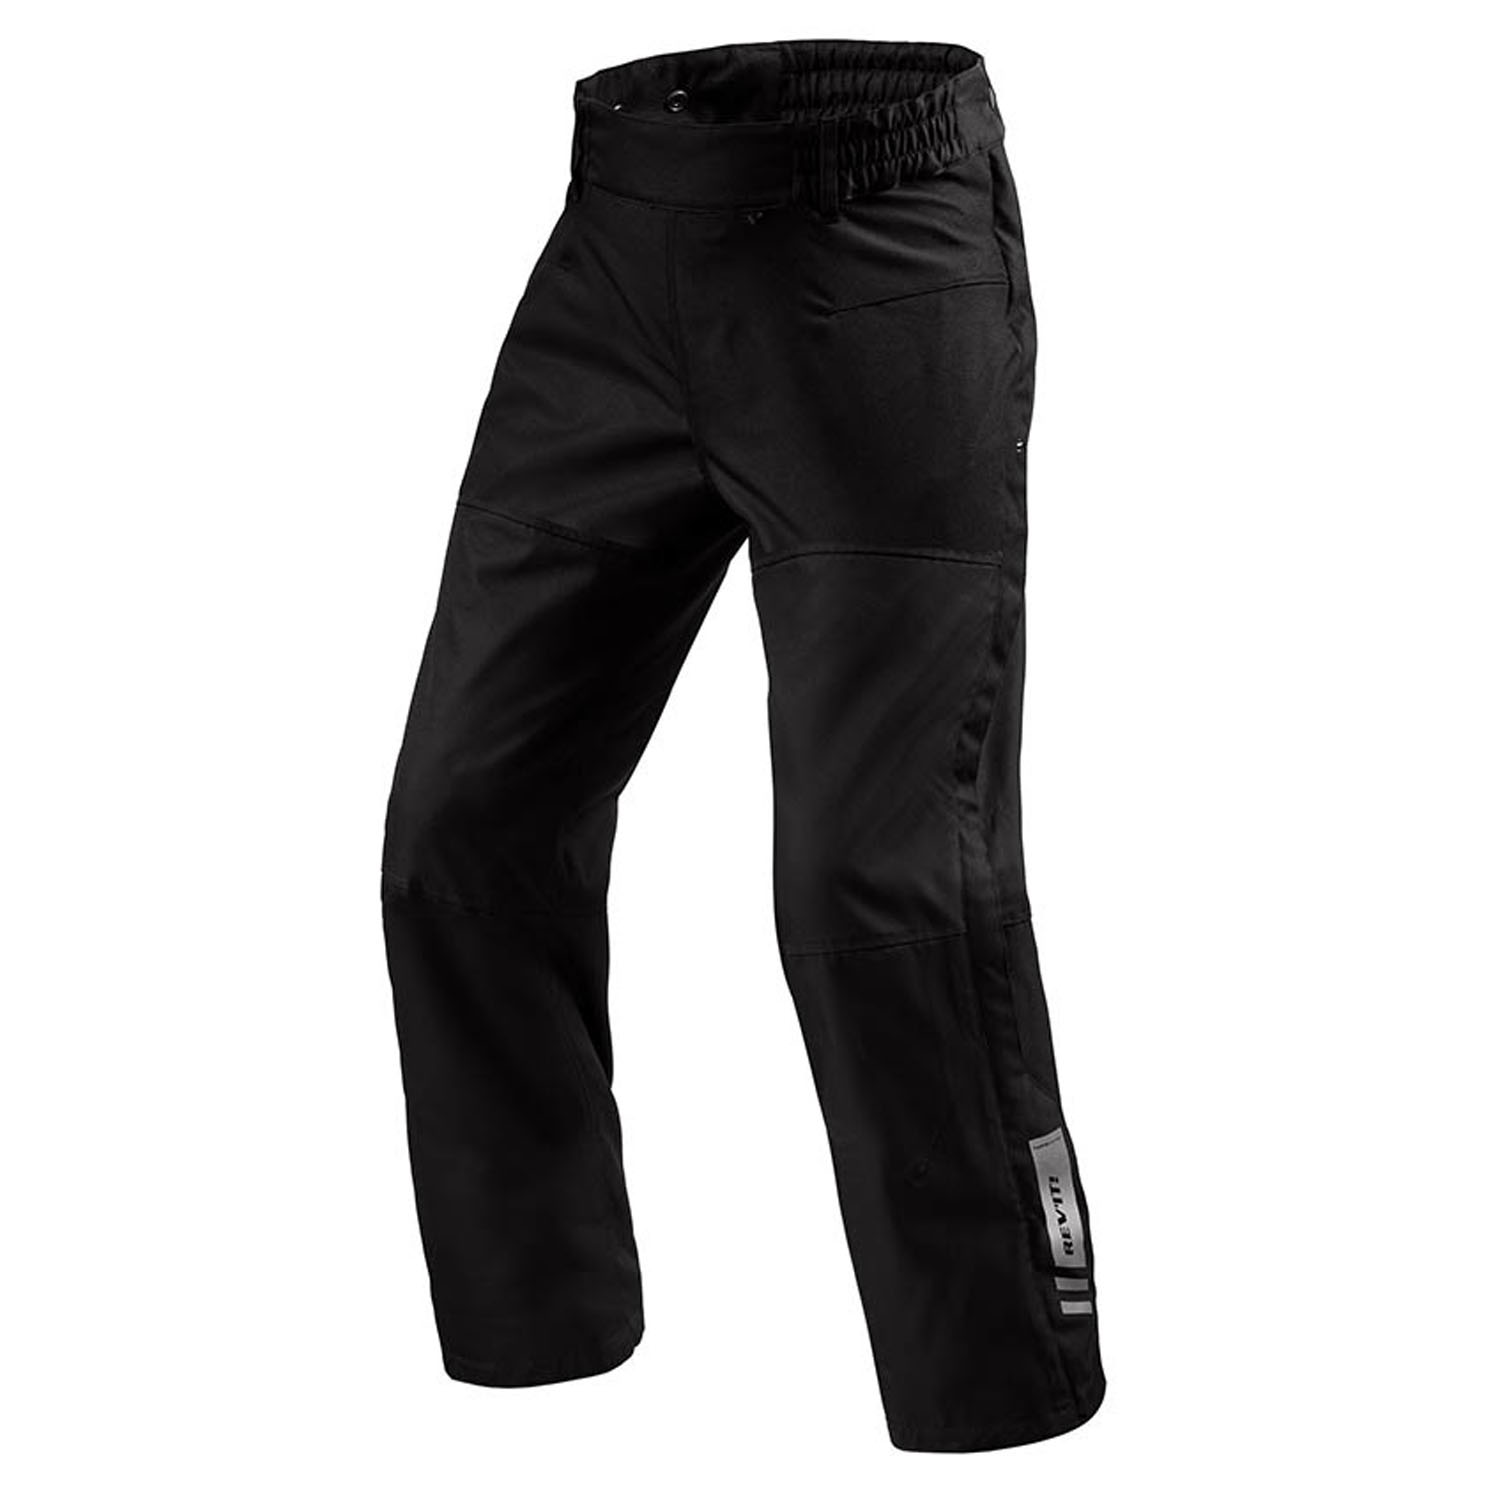 Image of REV'IT! Pants Axis 2 H2O Black Long Motorcycle Pants Size 2XL ID 8700001350815